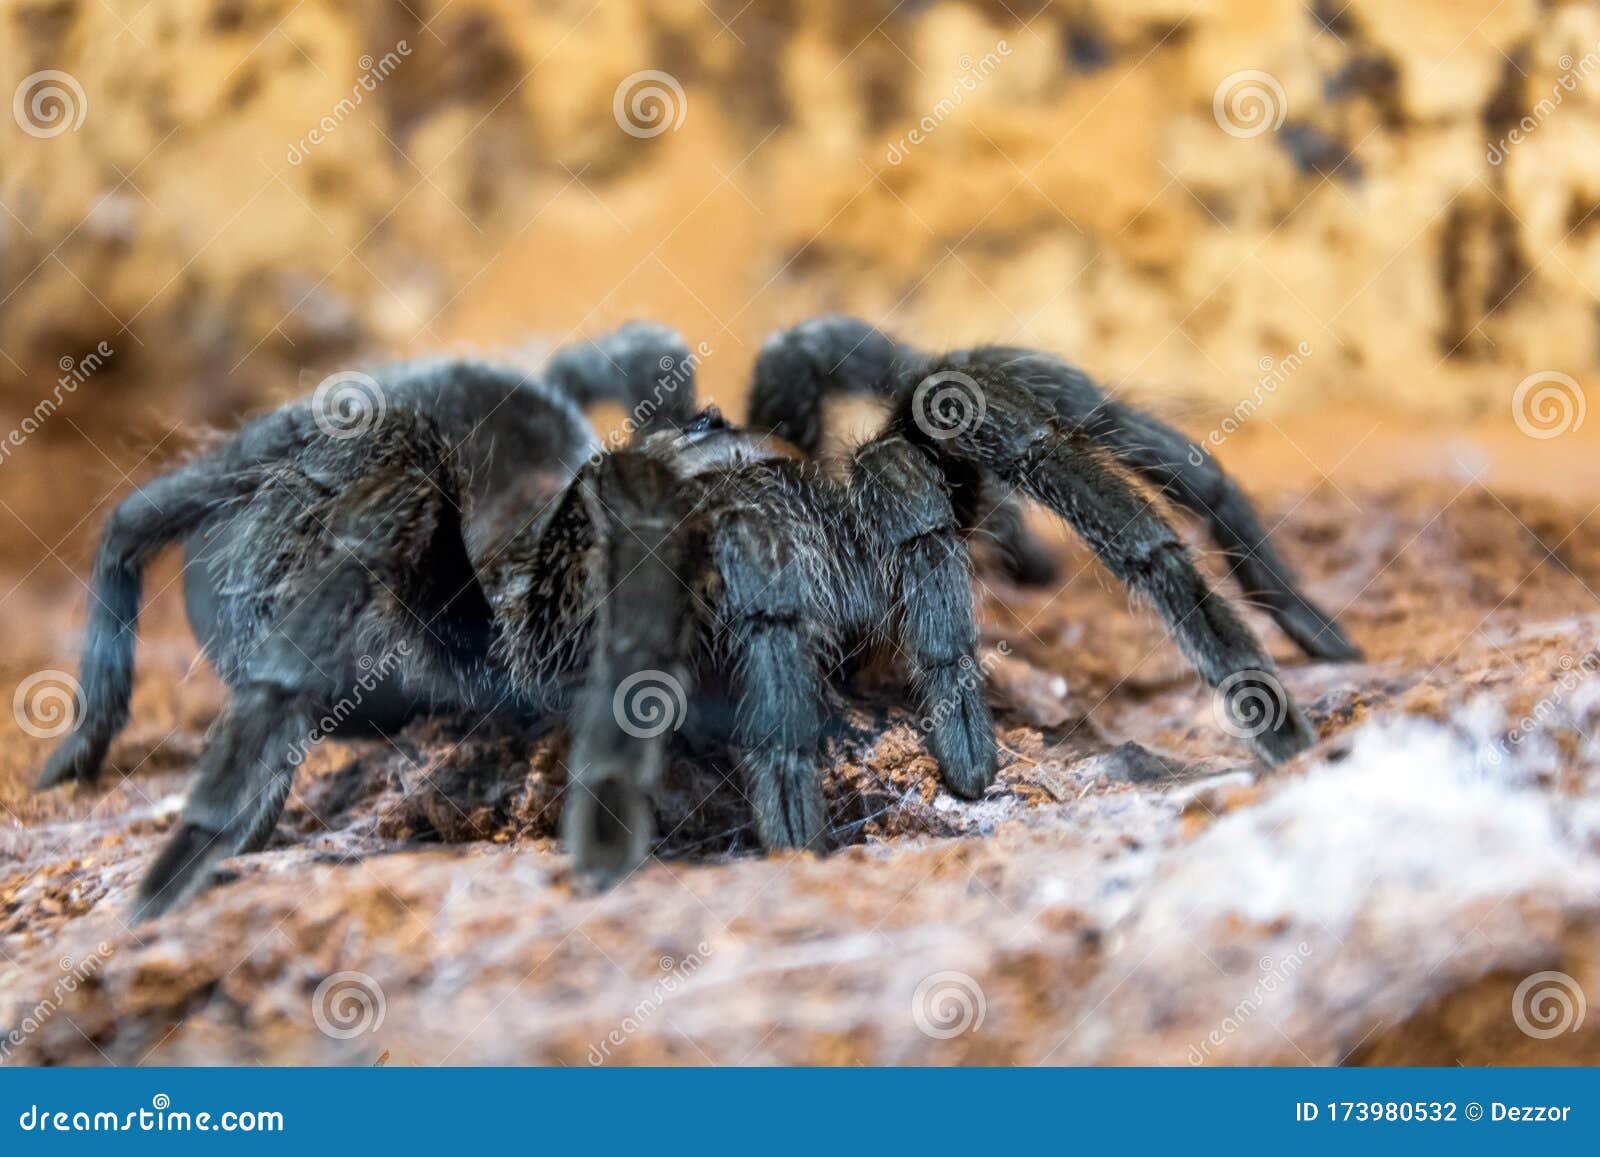 The Black Tarantula Grammostola Pulchra Spider Sits on the Ground Stock ...